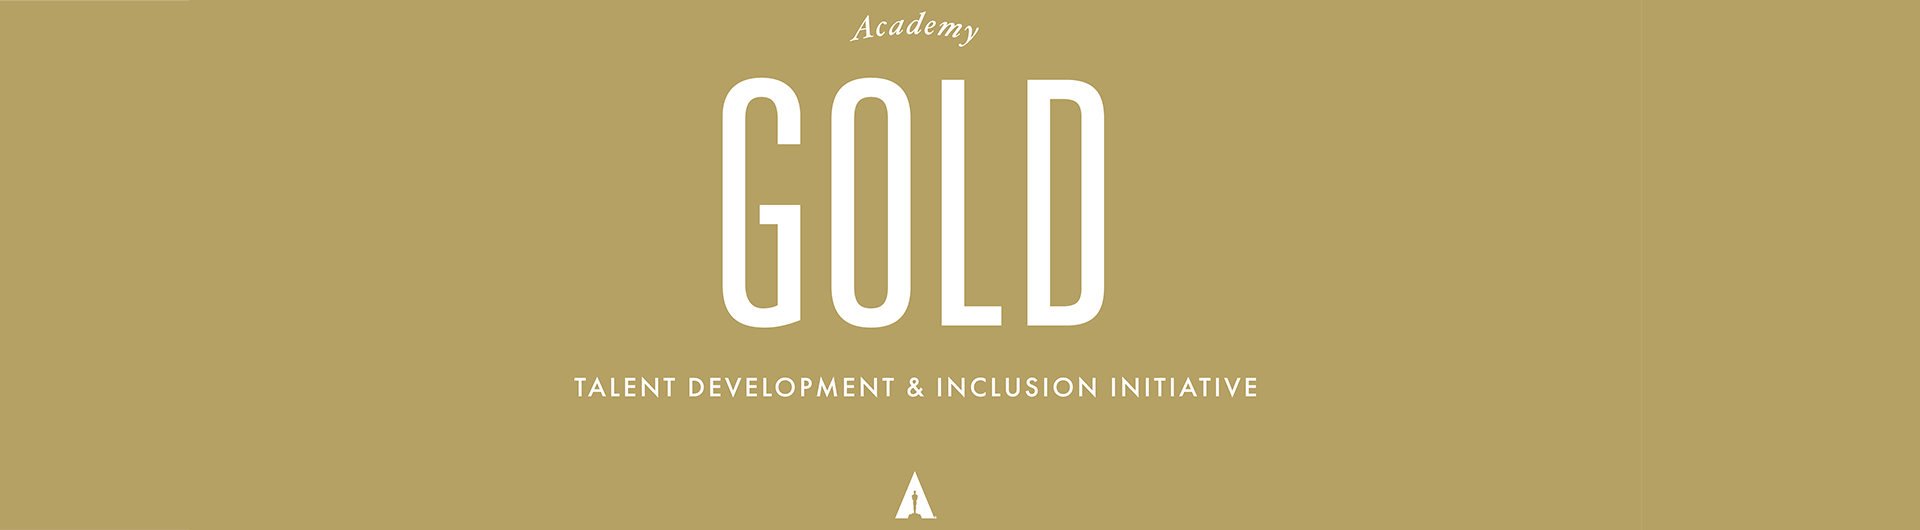 Academy Gold